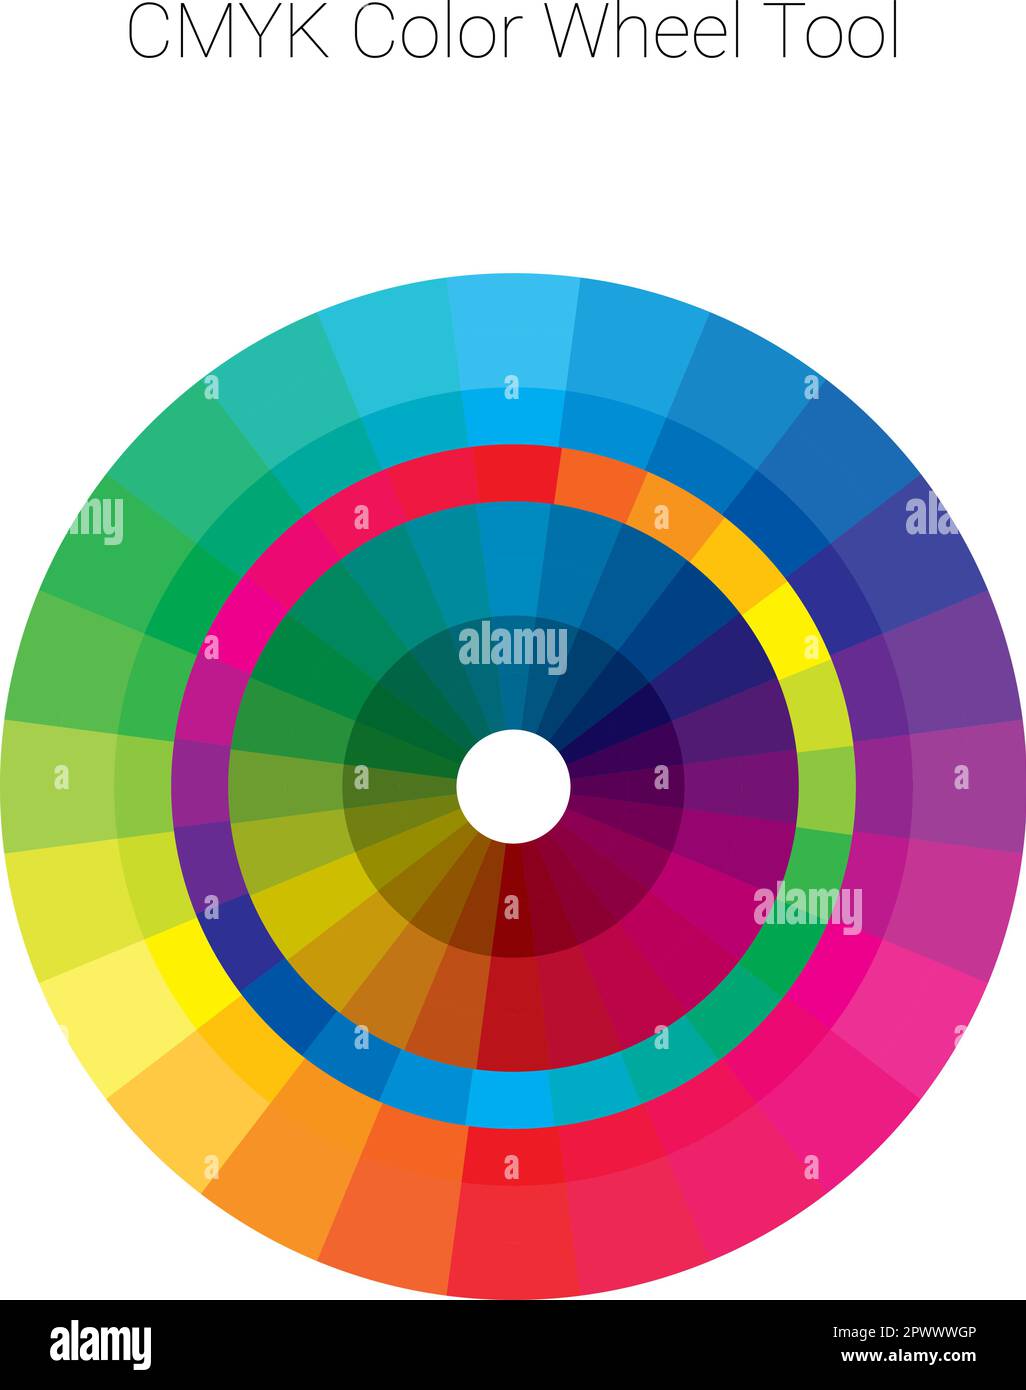 CMYK-Farbrad-Design-Tool für harmonische Farbkombinationen Stock Vektor